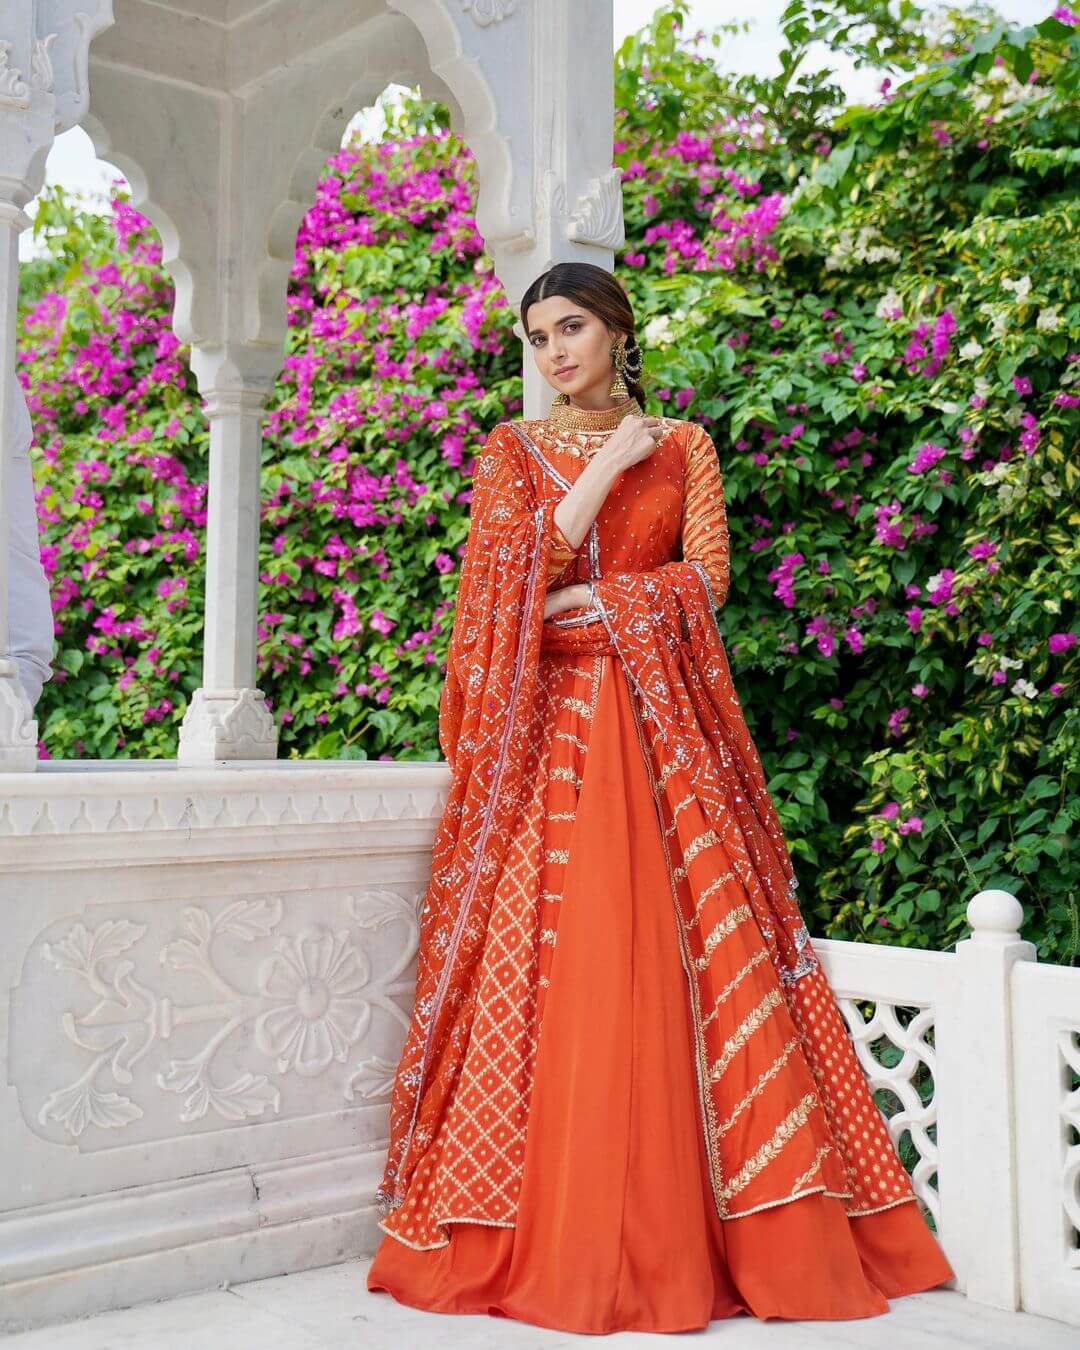 Nimrat Khaira Flattering Look In Orange Lehenga Outfit Nimrat Khaira Desi And Classy Outfit